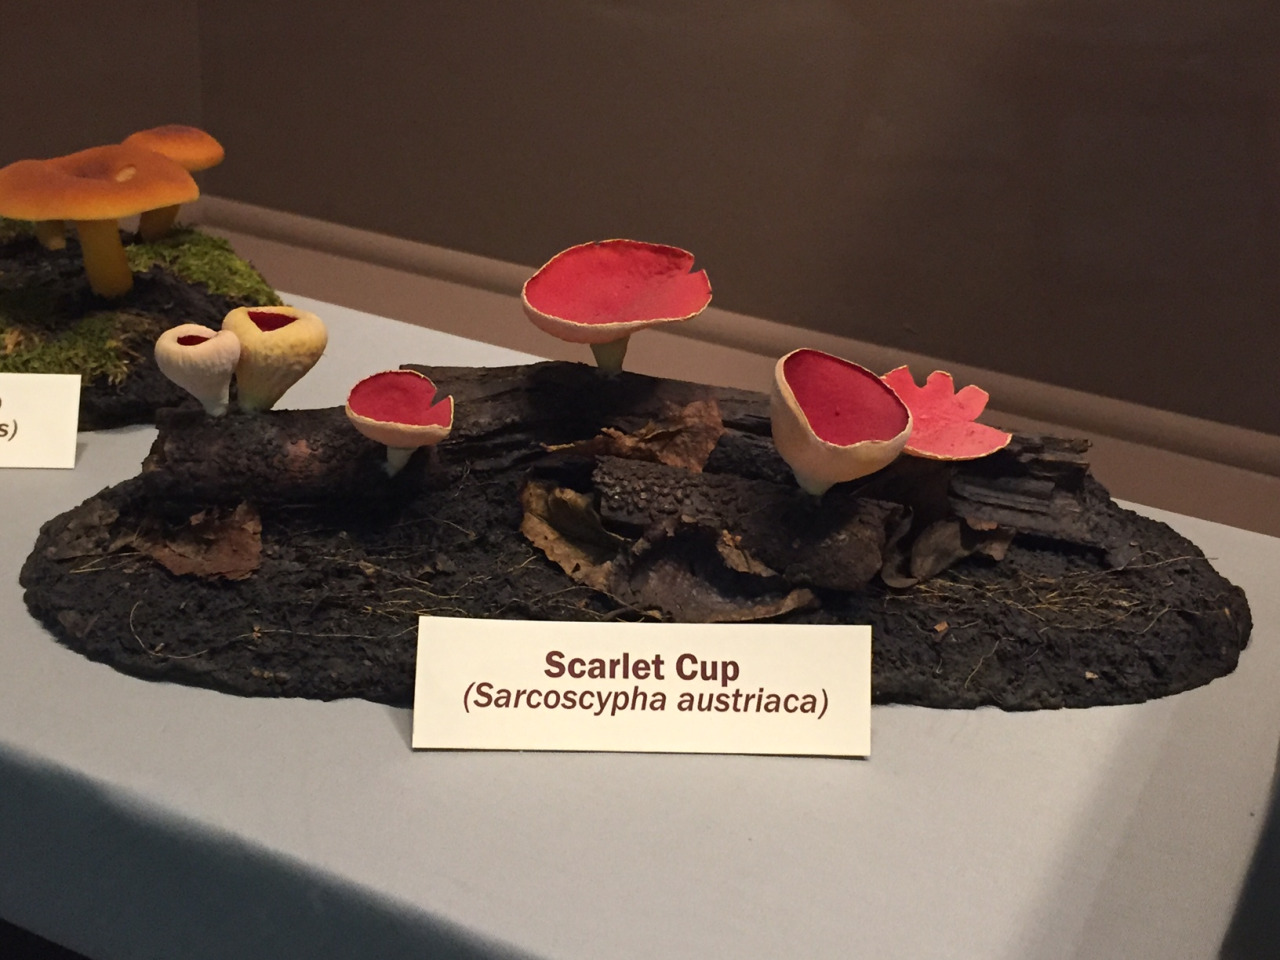 Scarlet Cup fungus in display case